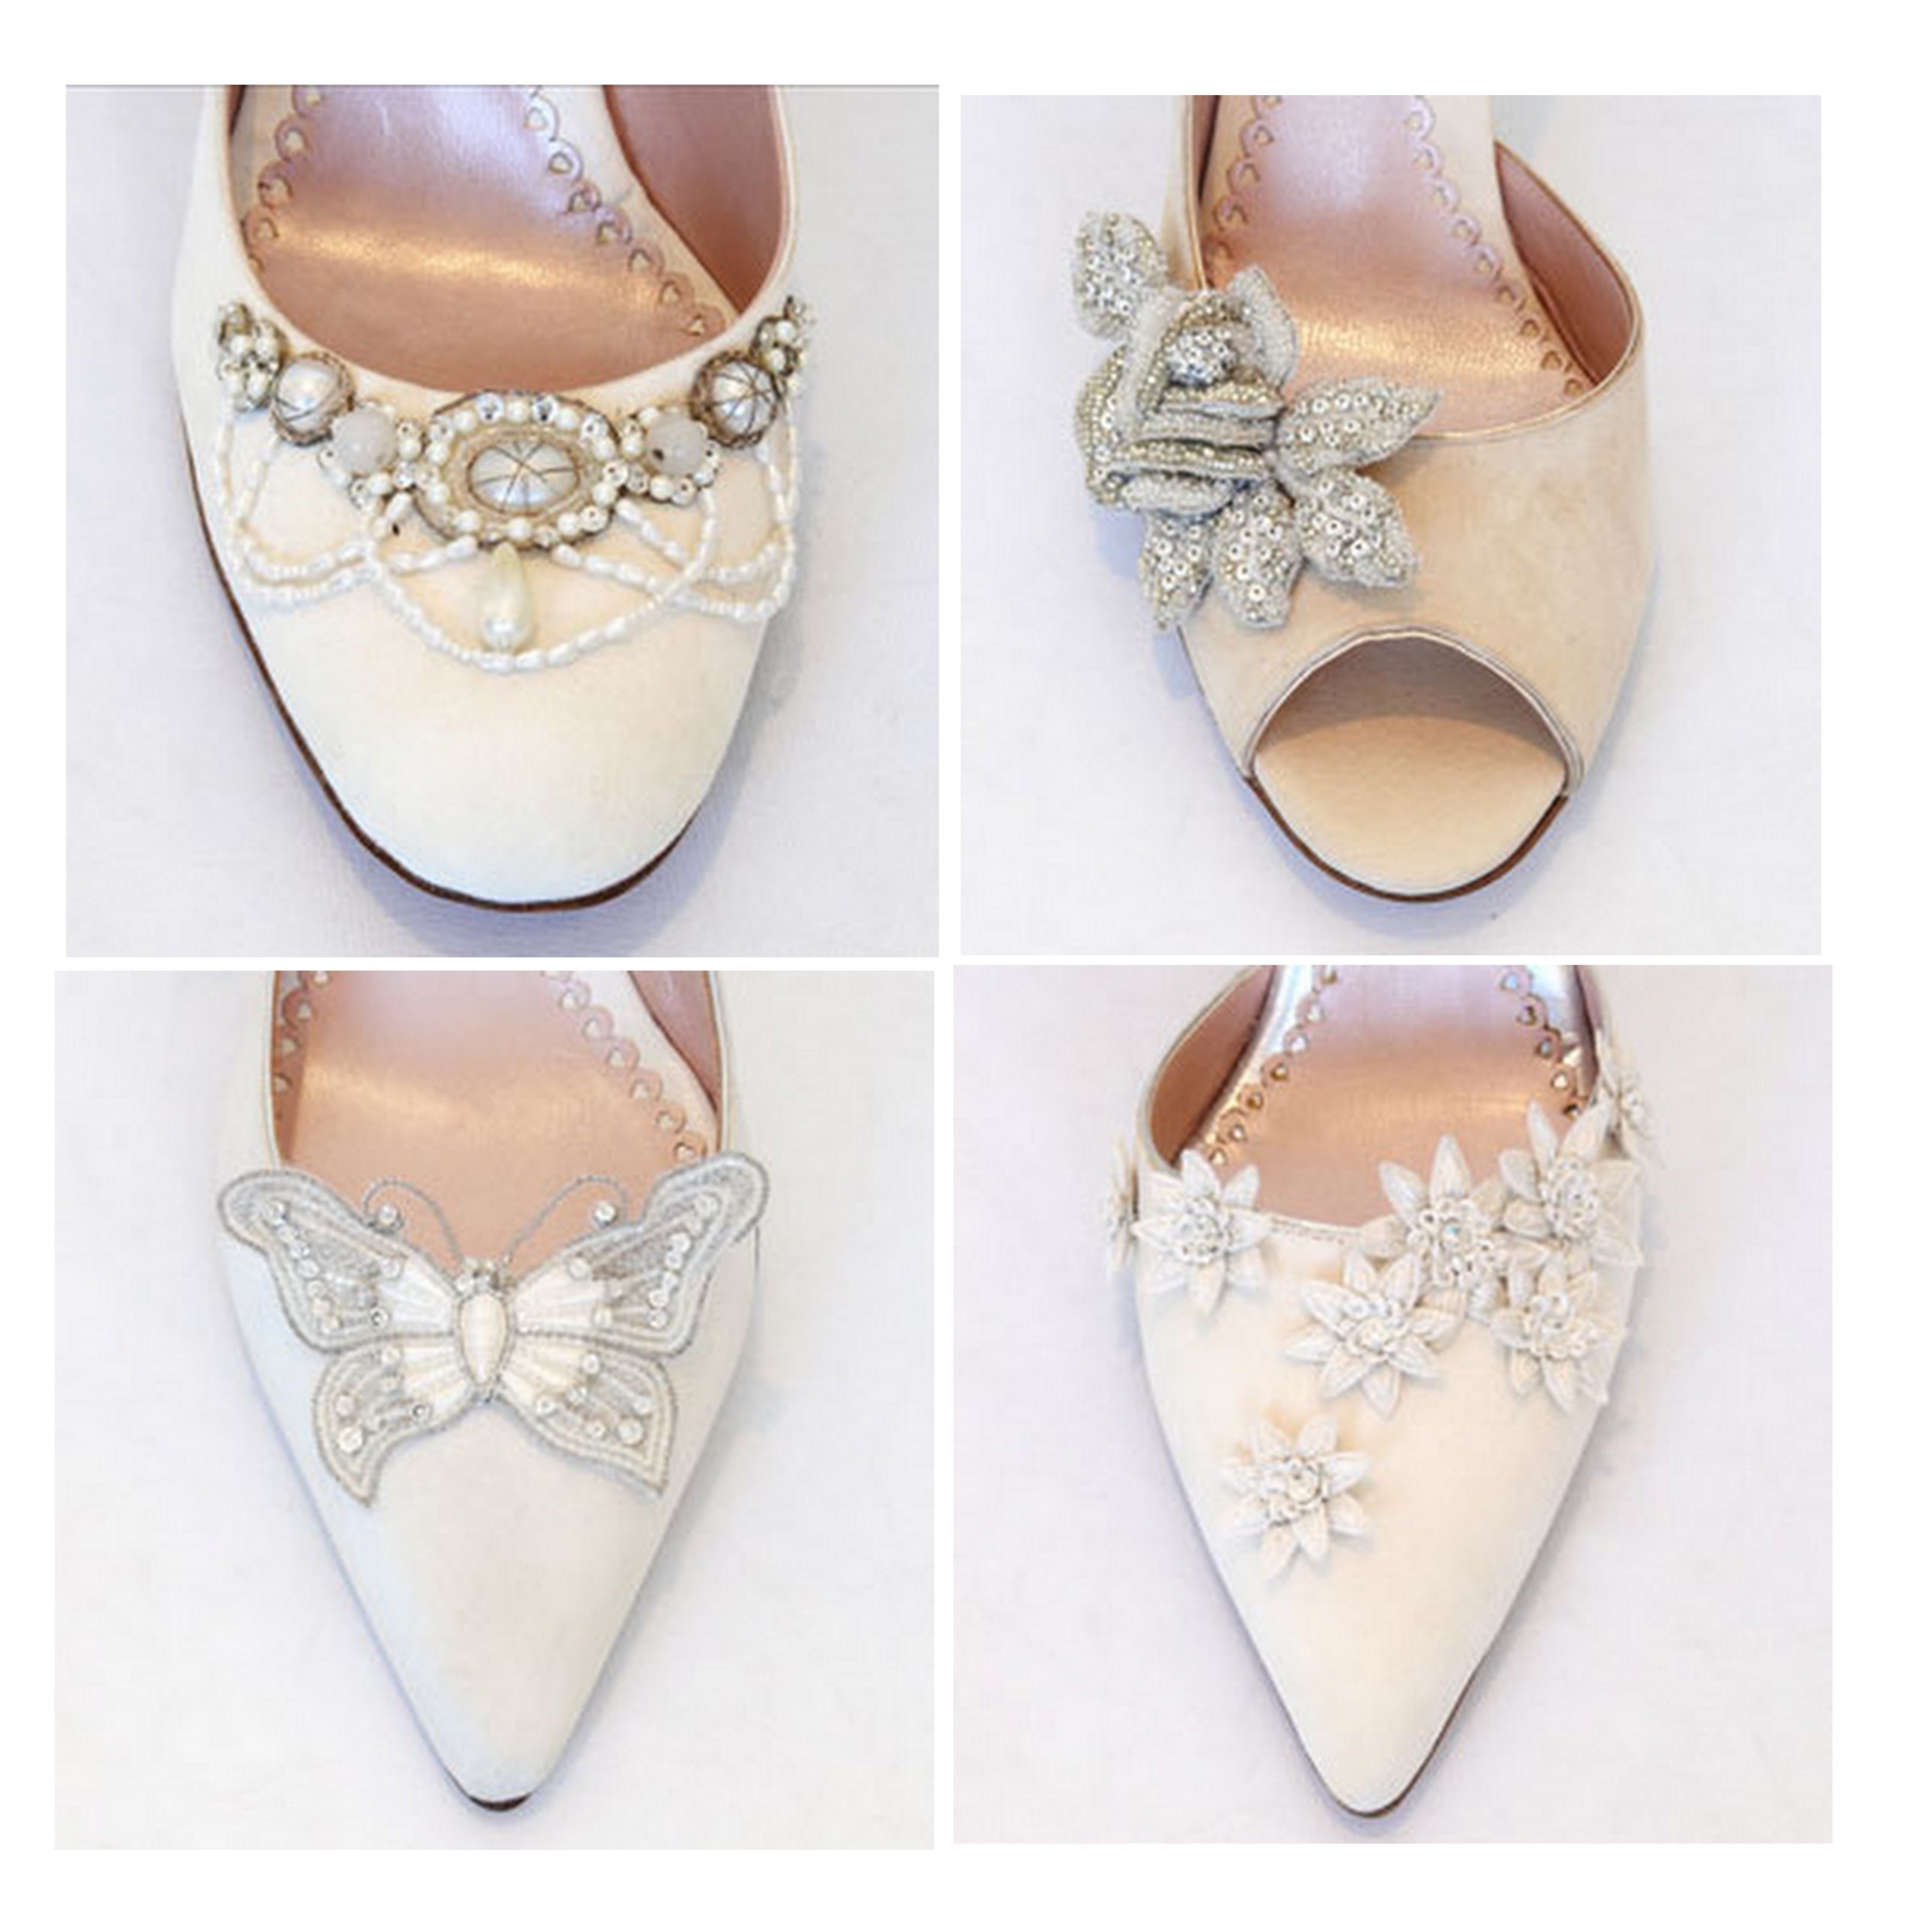 Bridal Shoes Ireland Bridal Shoes Low heel 2015 Flats Wedges PIcs in ...